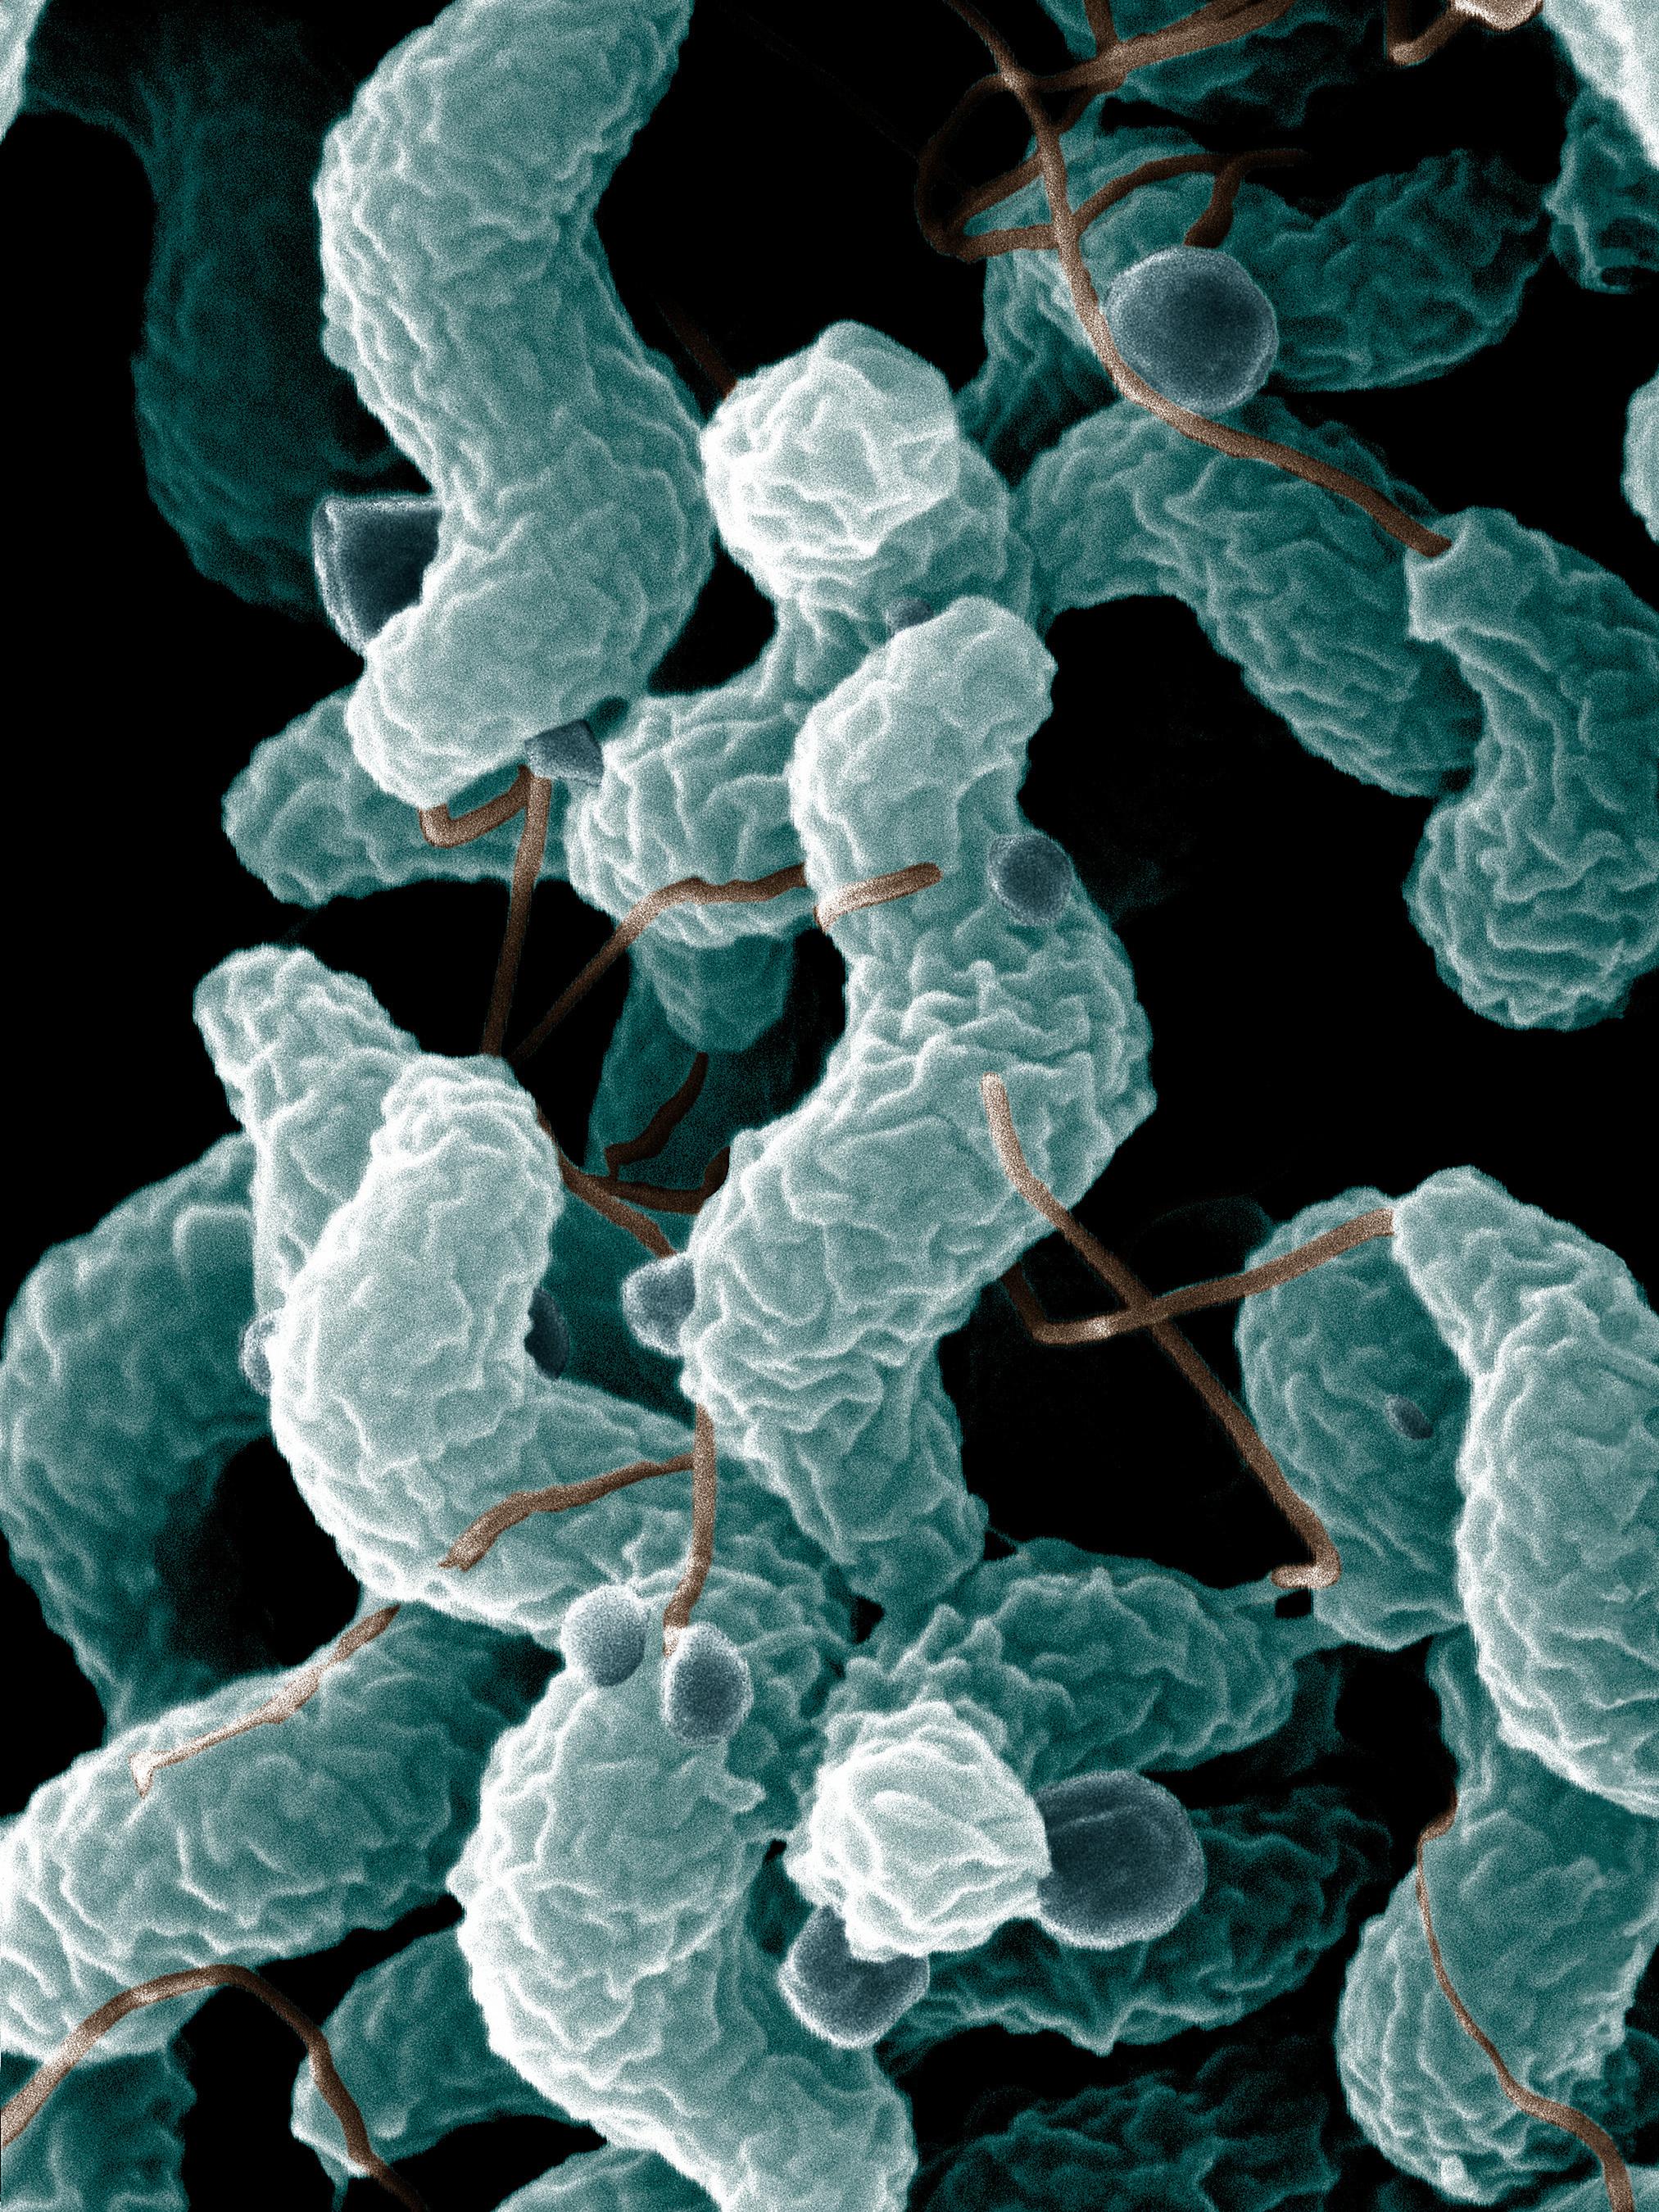 Bacterias del género Campylobacter.